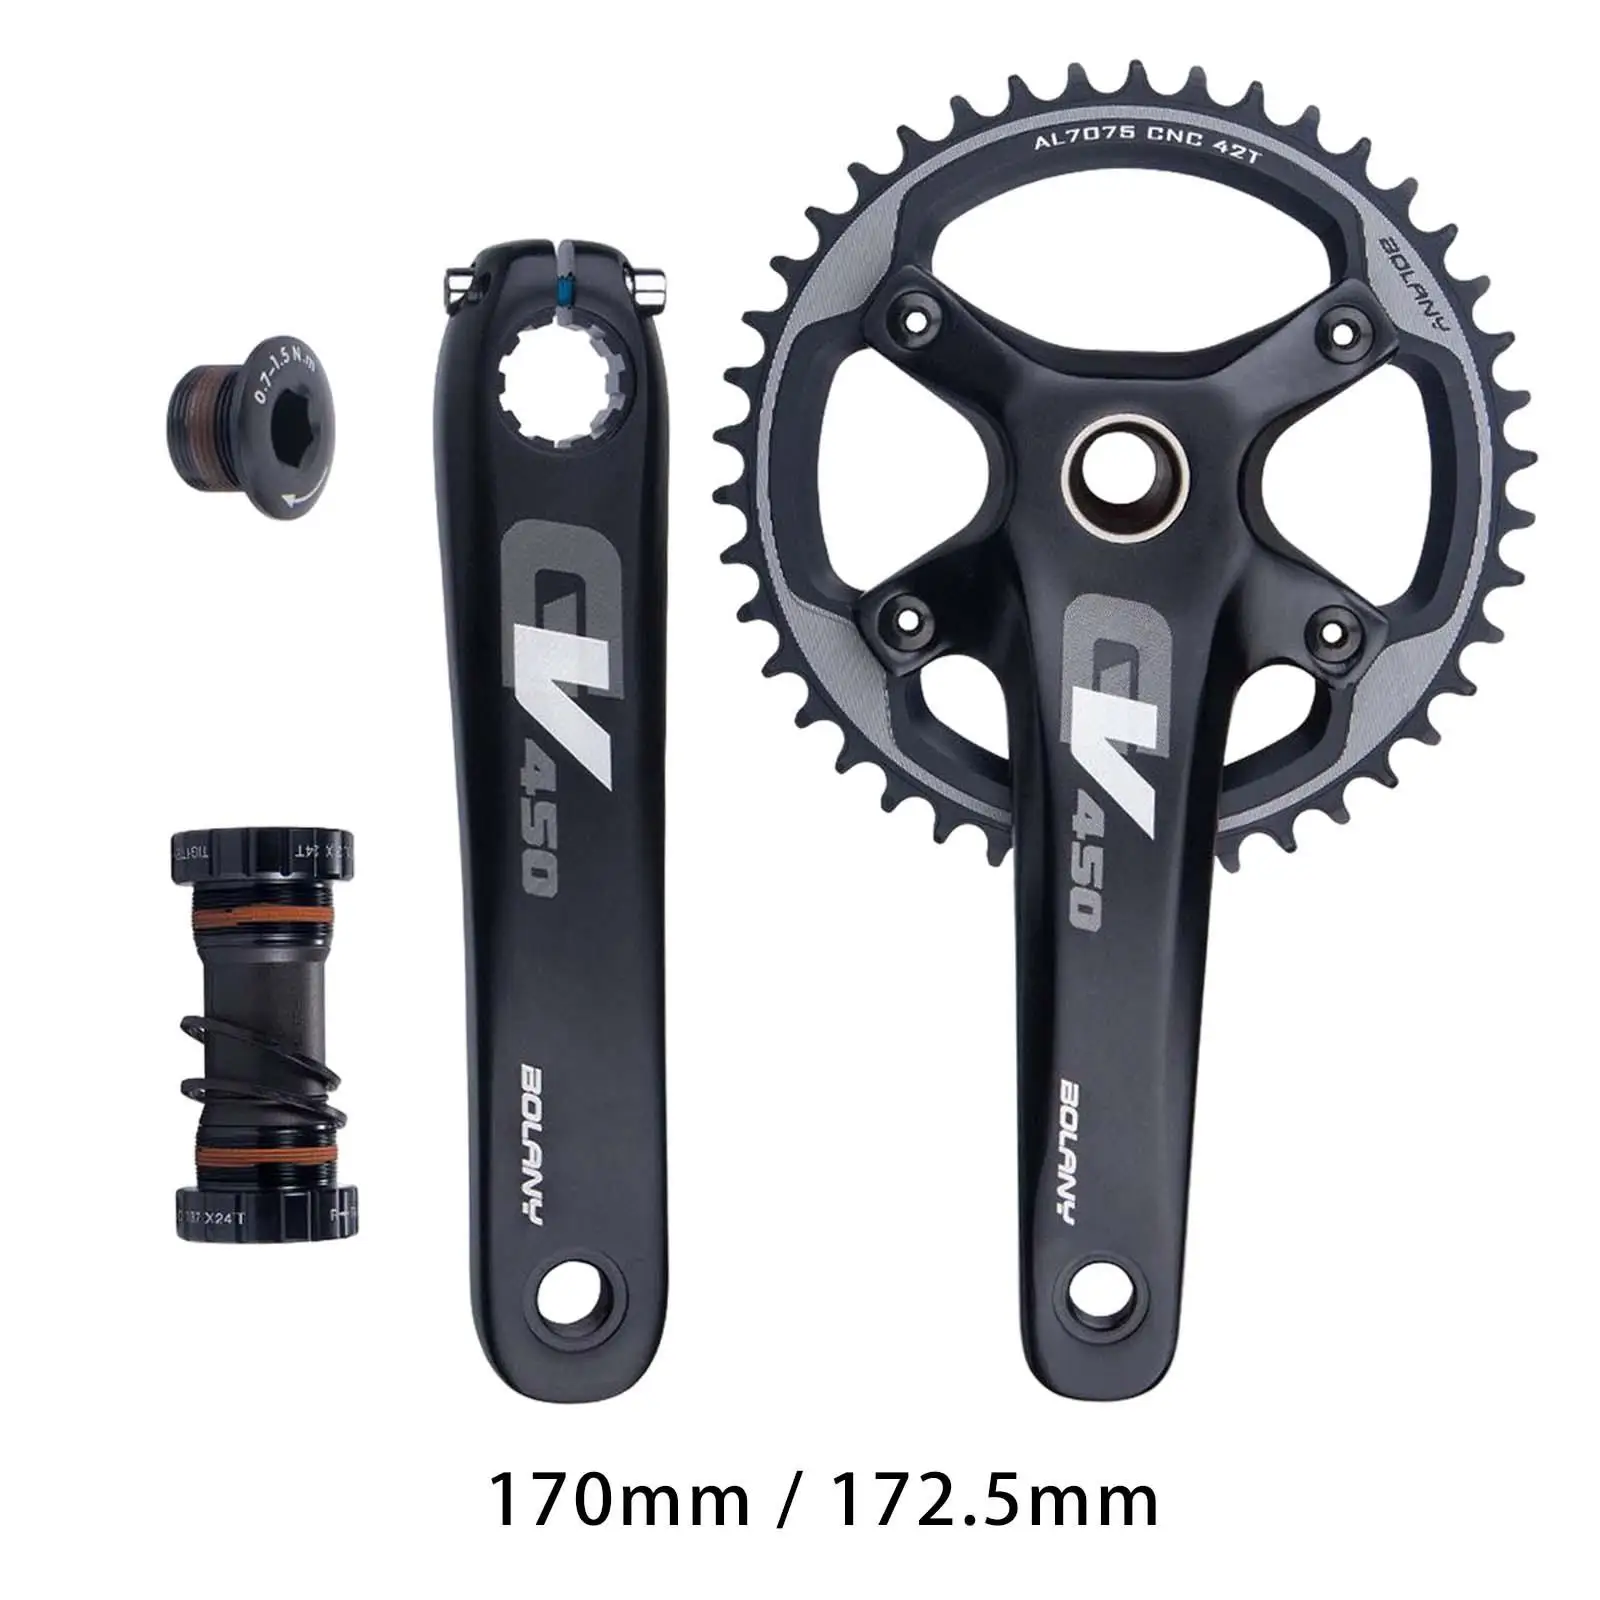 Mountain Bike Crankset Crank Arm Set Component Replacement Accessories